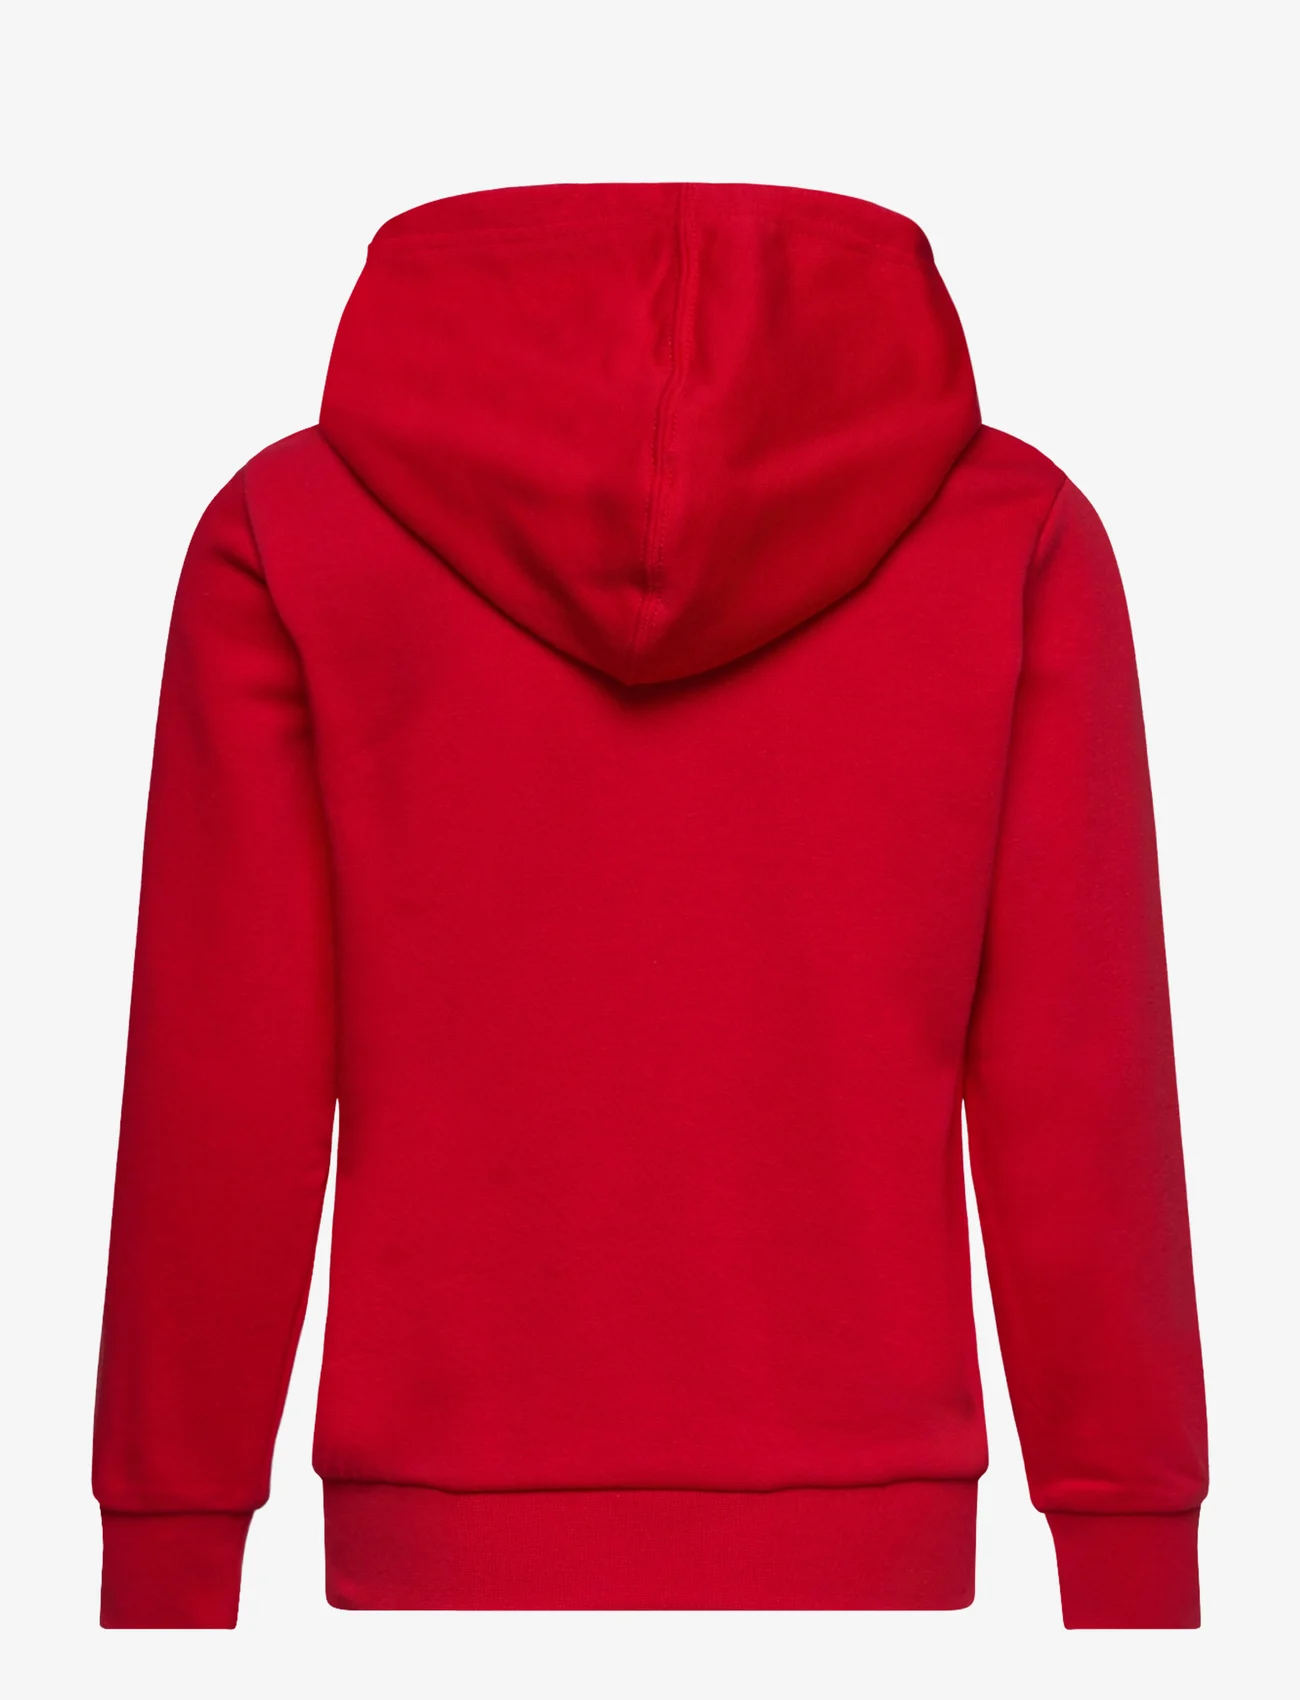 Champion - Hooded Sweatshirt - hupparit - true red - 1